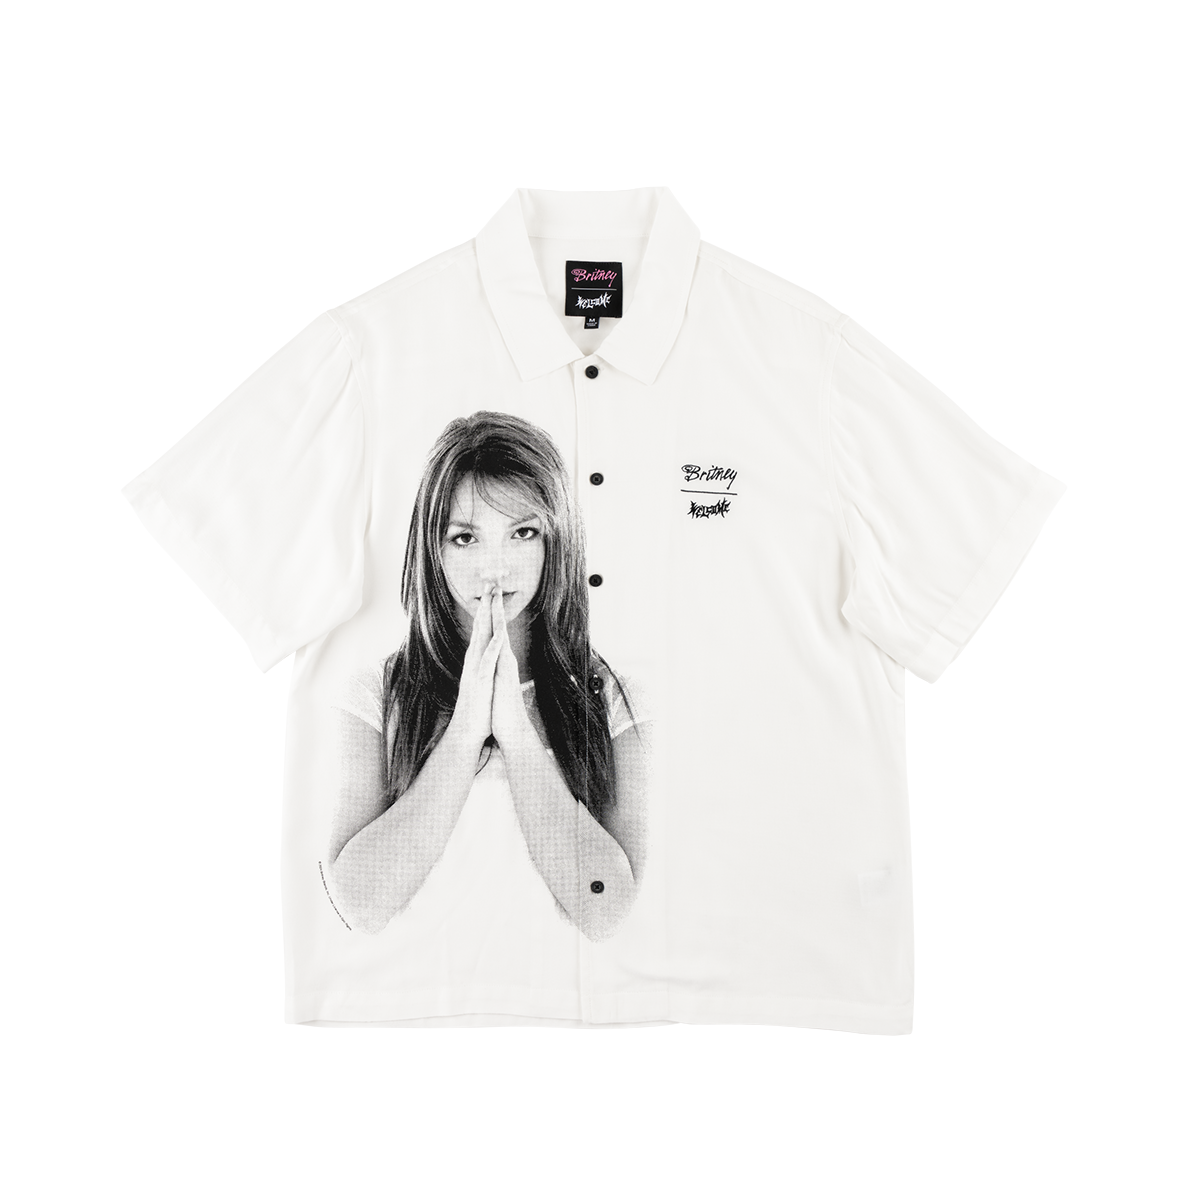 Welcome x Britney Rayon Photo Shirt - White